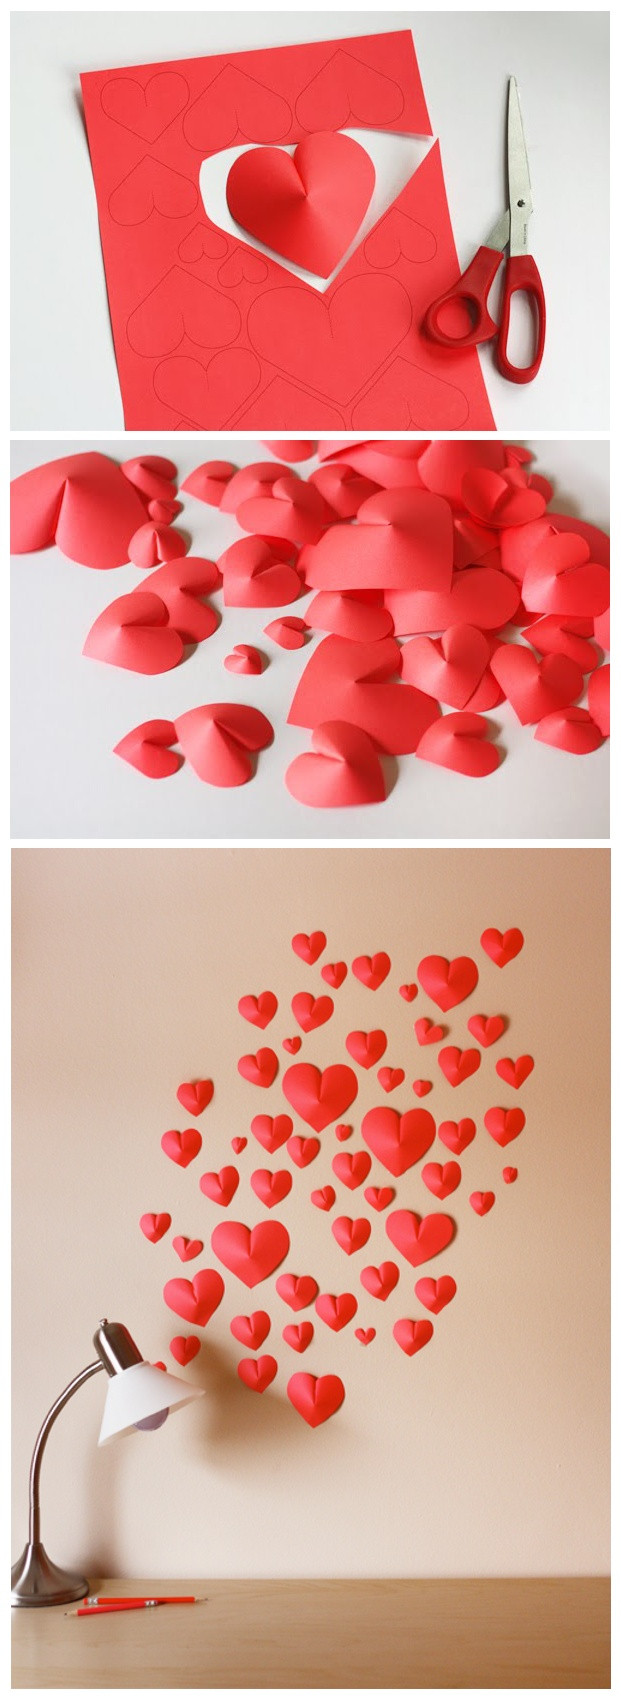 Valentine DIY Decorations
 Chic Valentine s Day Decorating Ideas